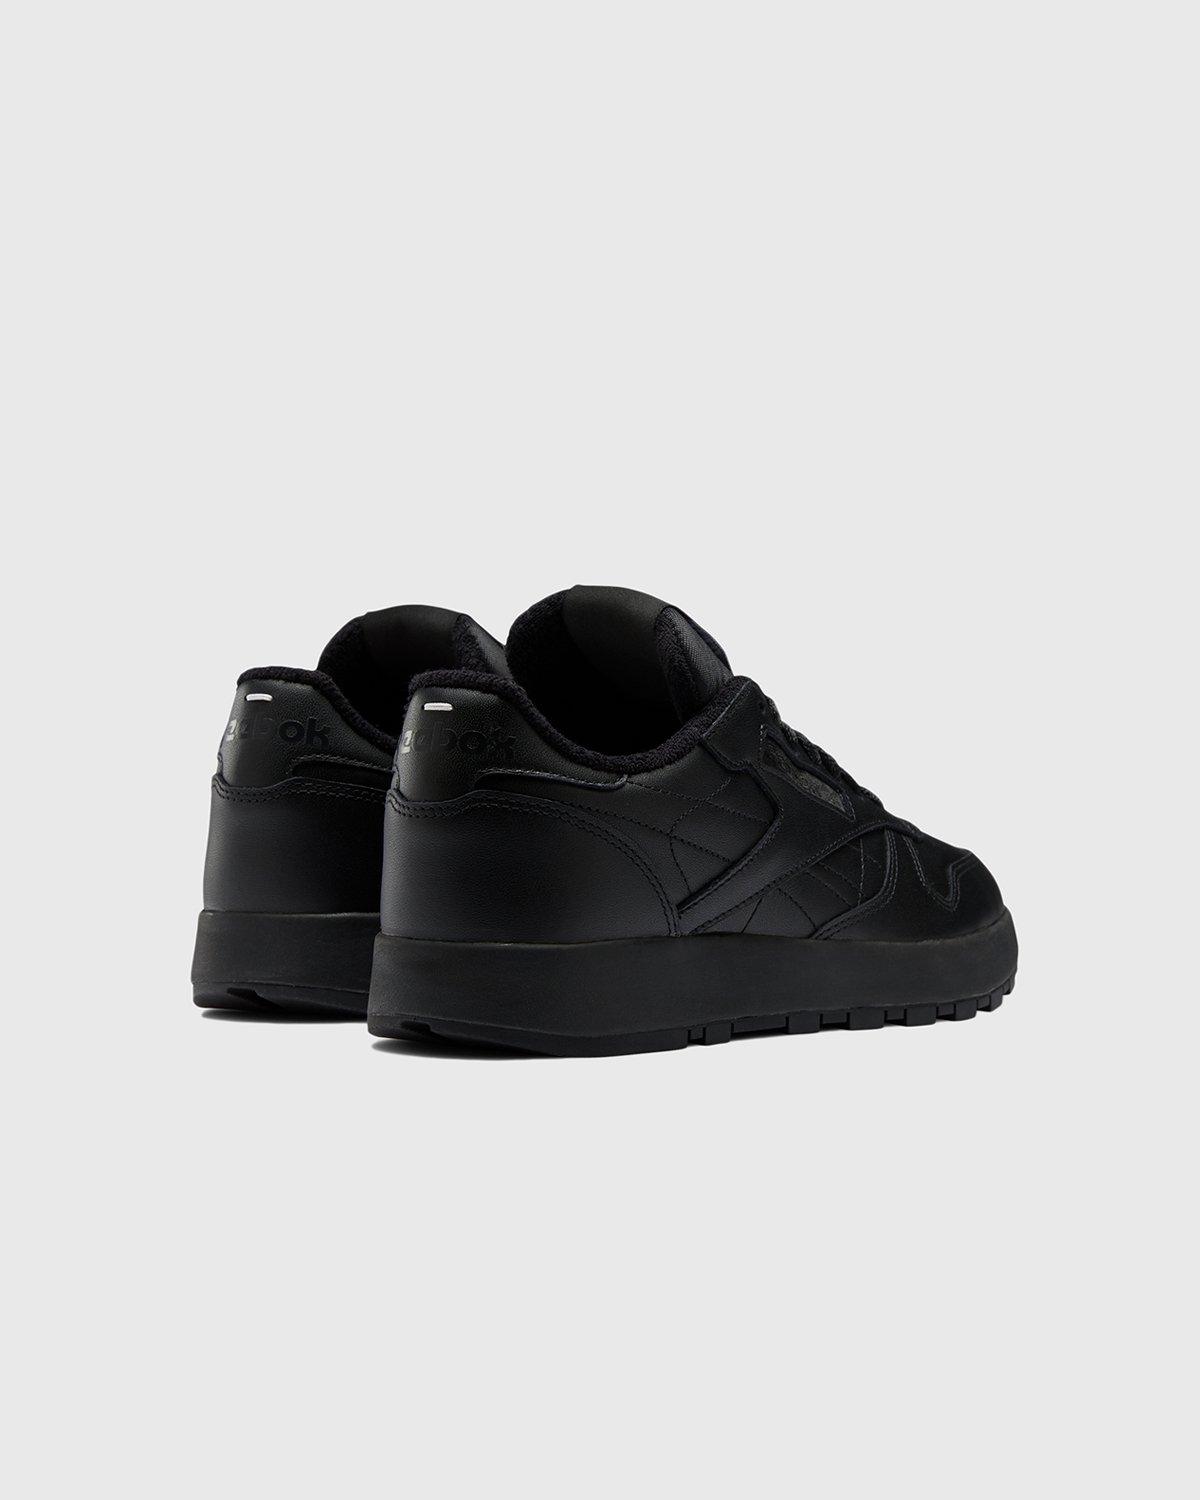 Maison Margiela x Reebok - Classic Leather Tabi Black - Footwear - Black - Image 3